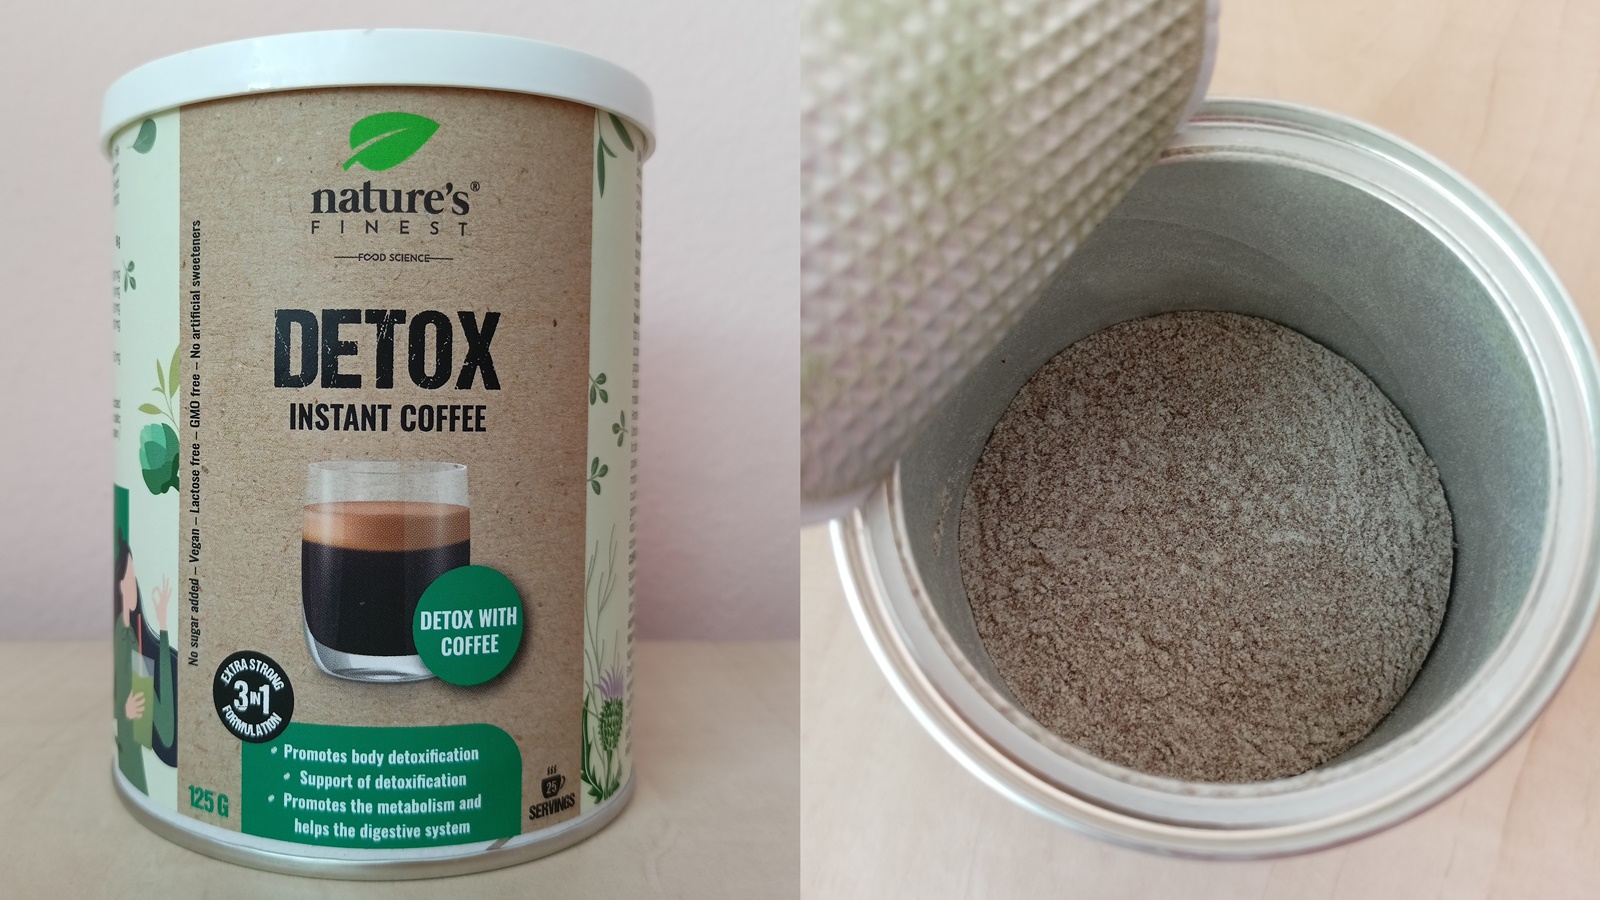 Recenzia: Detox Instant Coffee od Nature’s Finest